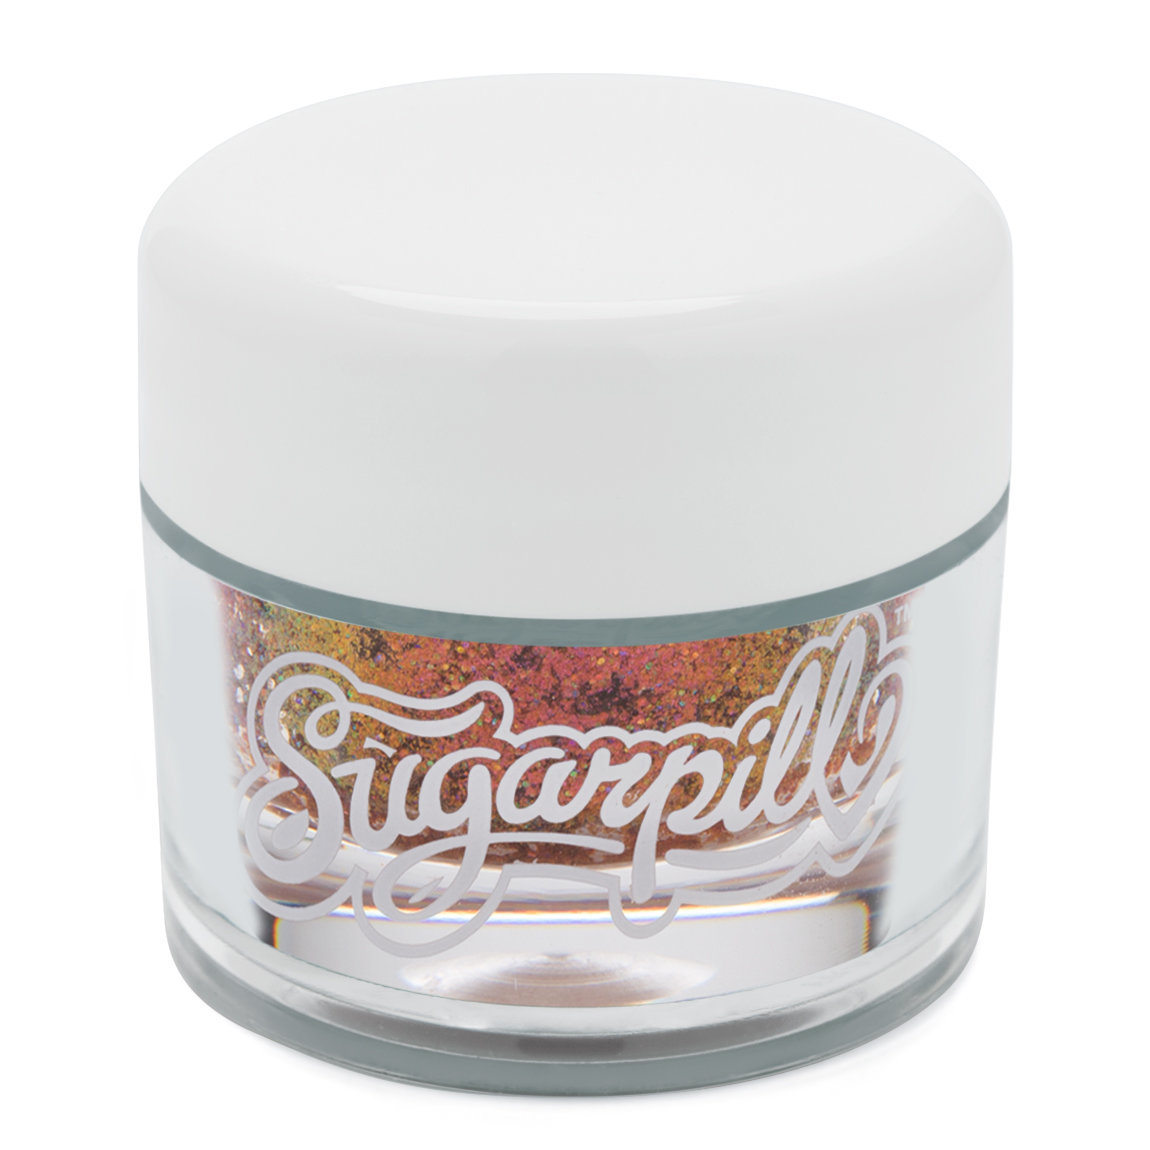 Sugarpill Cosmetics Loose Eyeshadow Brick Toast alternative view 1.